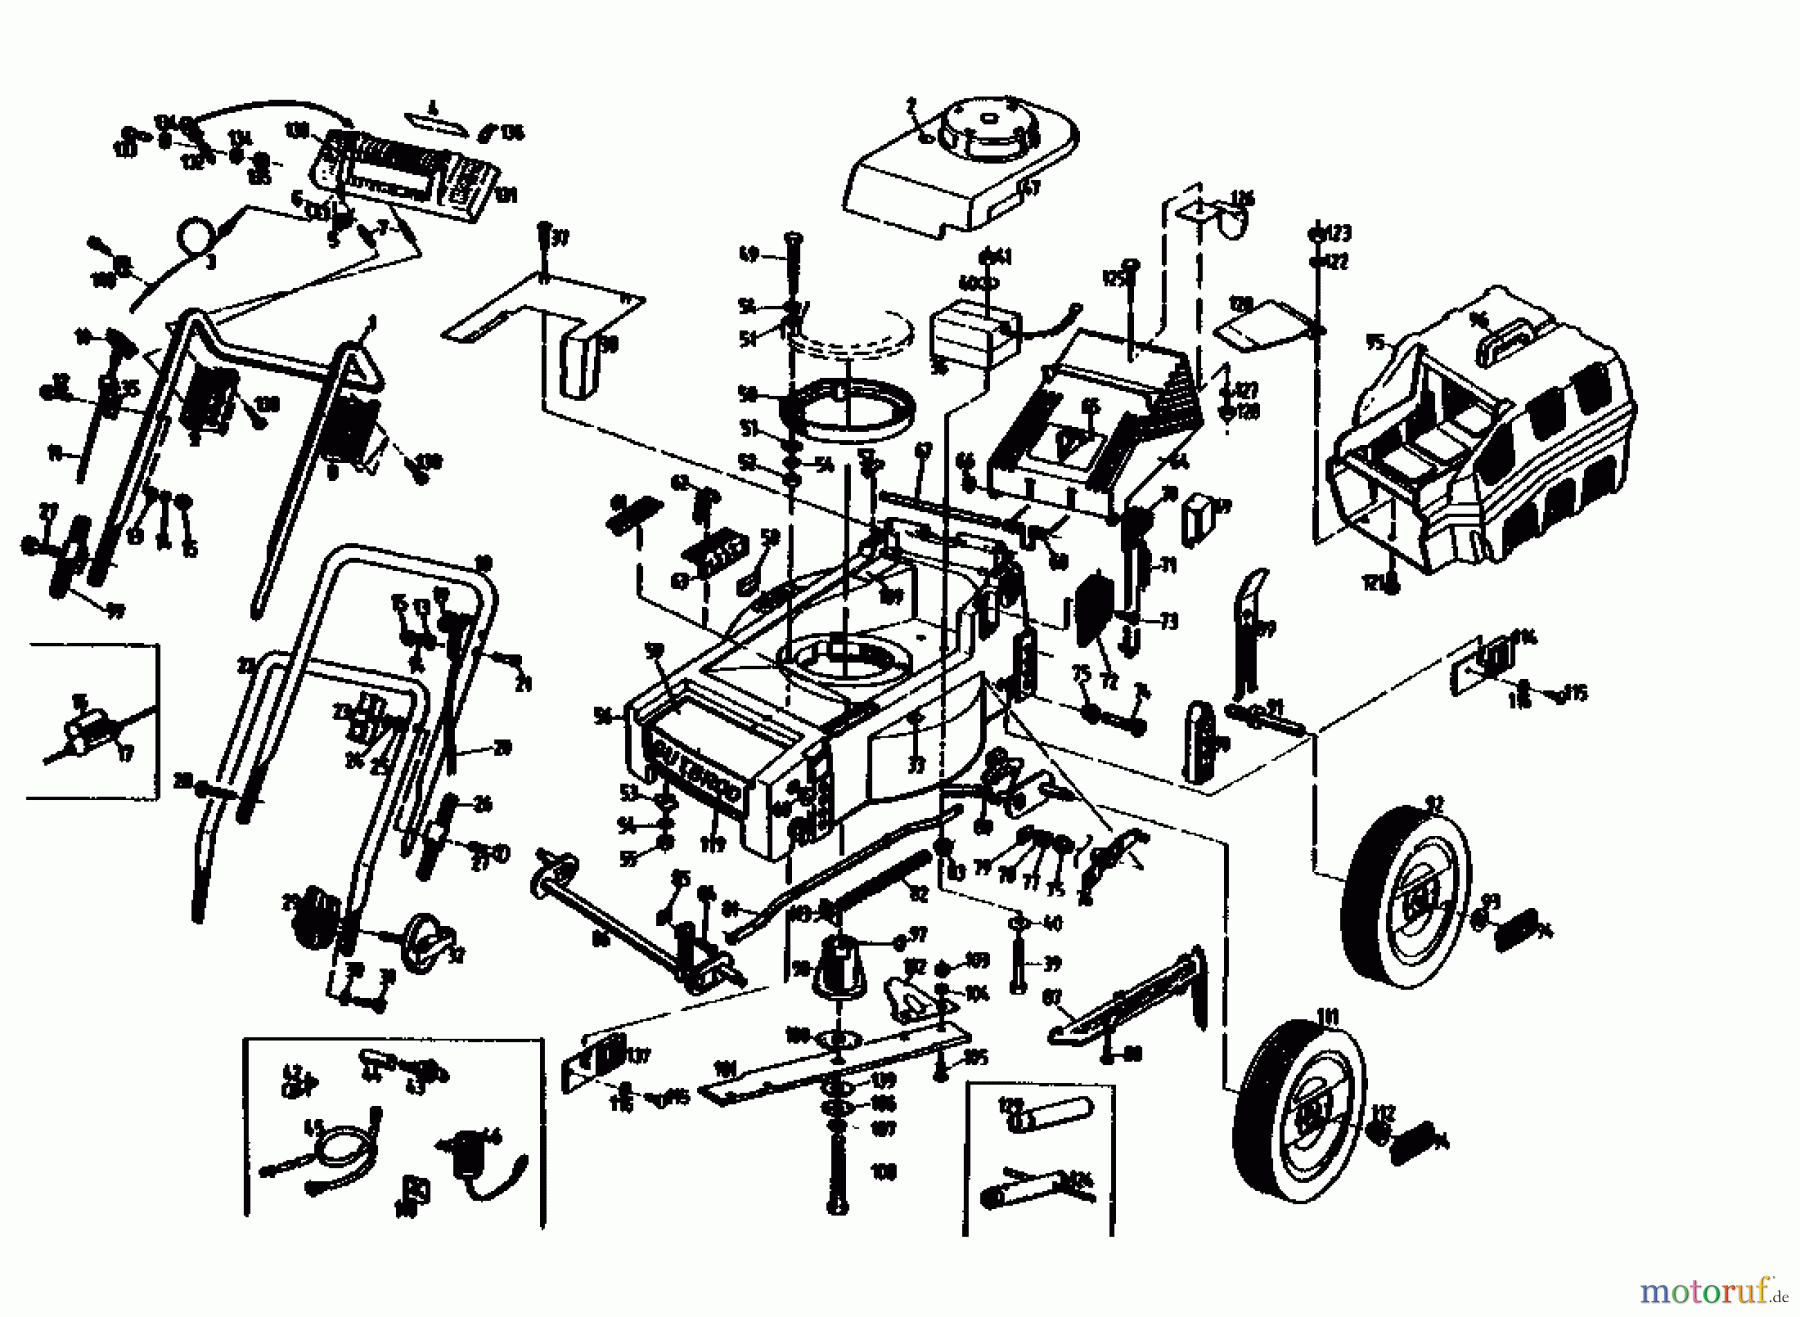  Gutbrod Petrol mower HB 40 L 02896.02  (1990) Basic machine